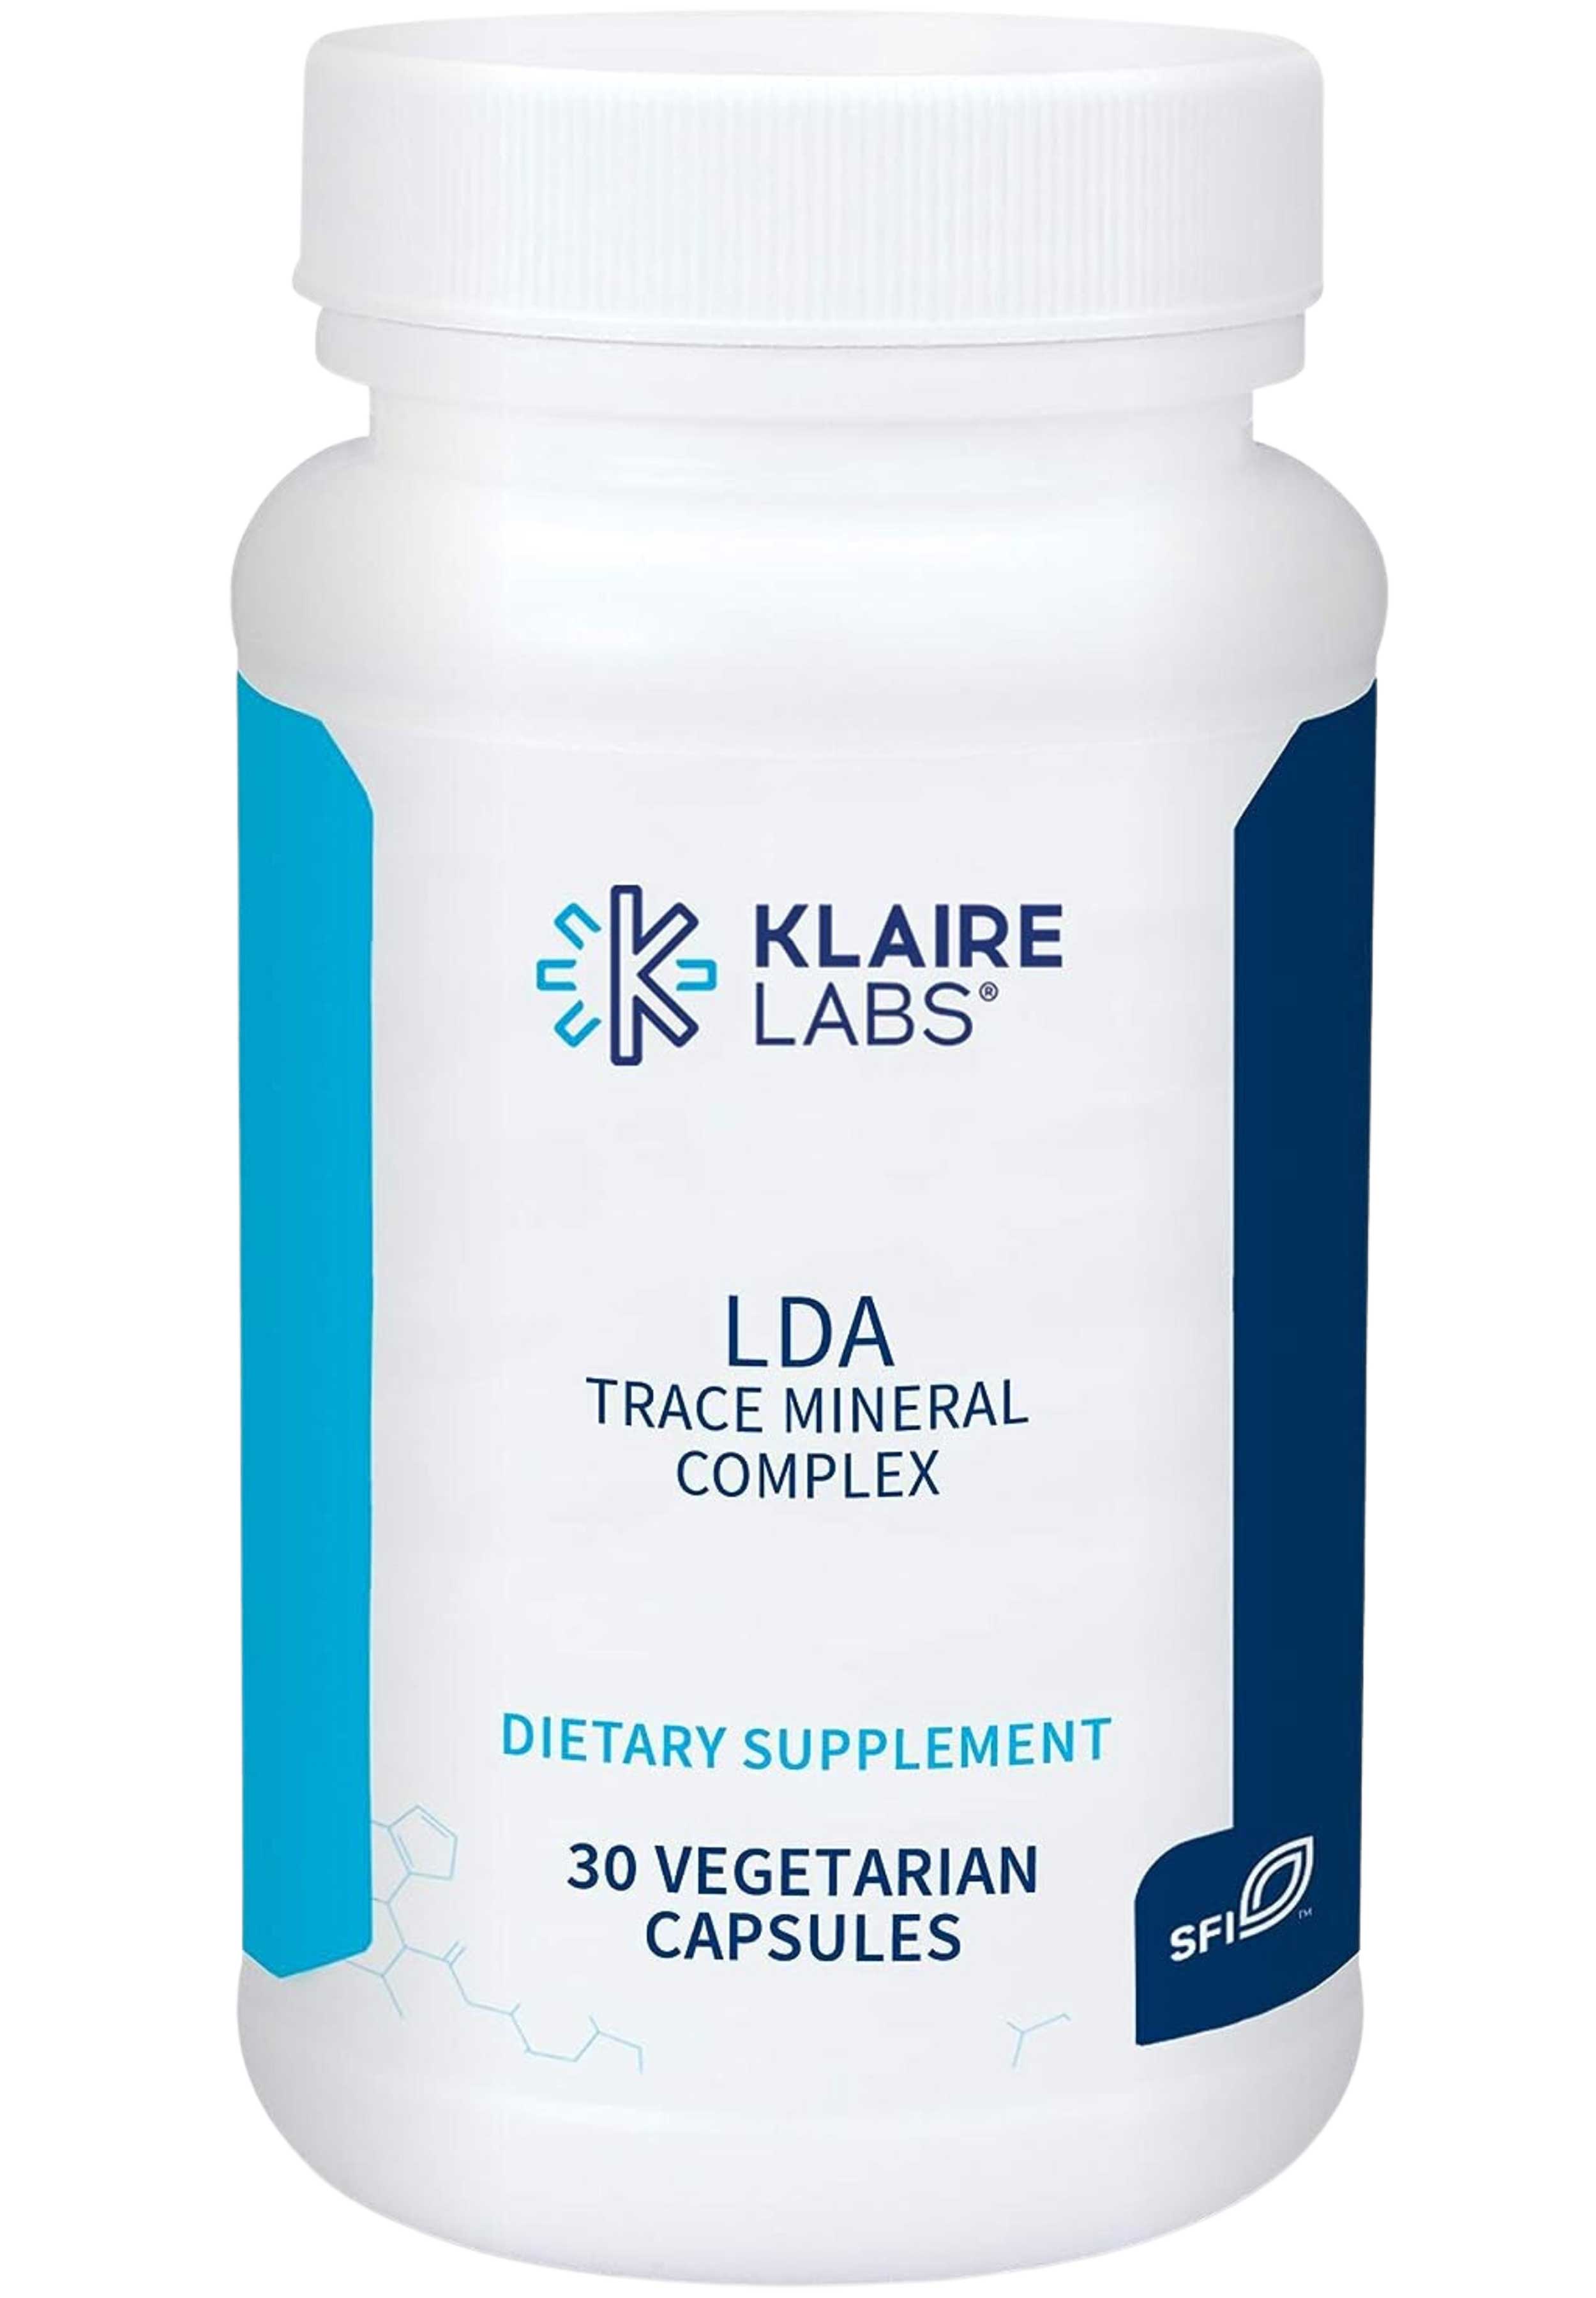 Klaire Labs LDA Trace Mineral Complex